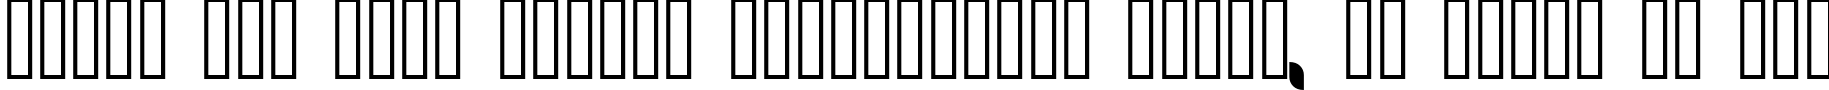 Пример написания шрифтом Danube Bold текста на русском